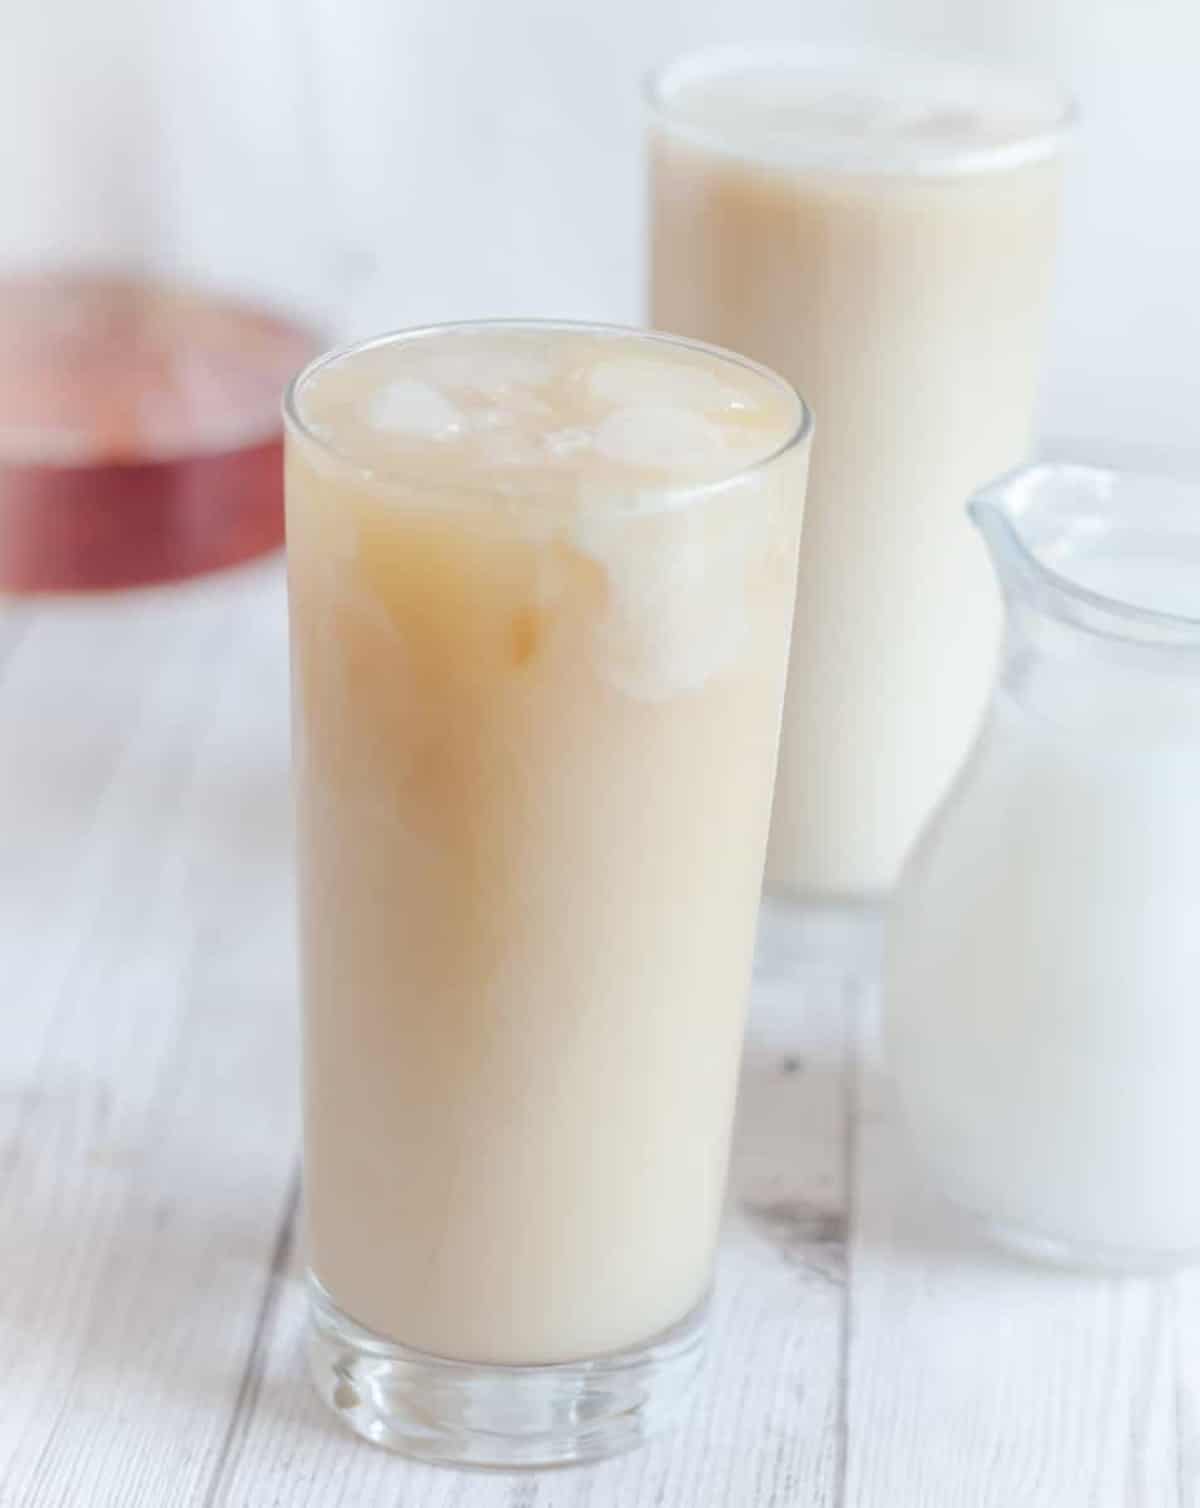 iced london fog latte copycat starbucks cold drink recipe